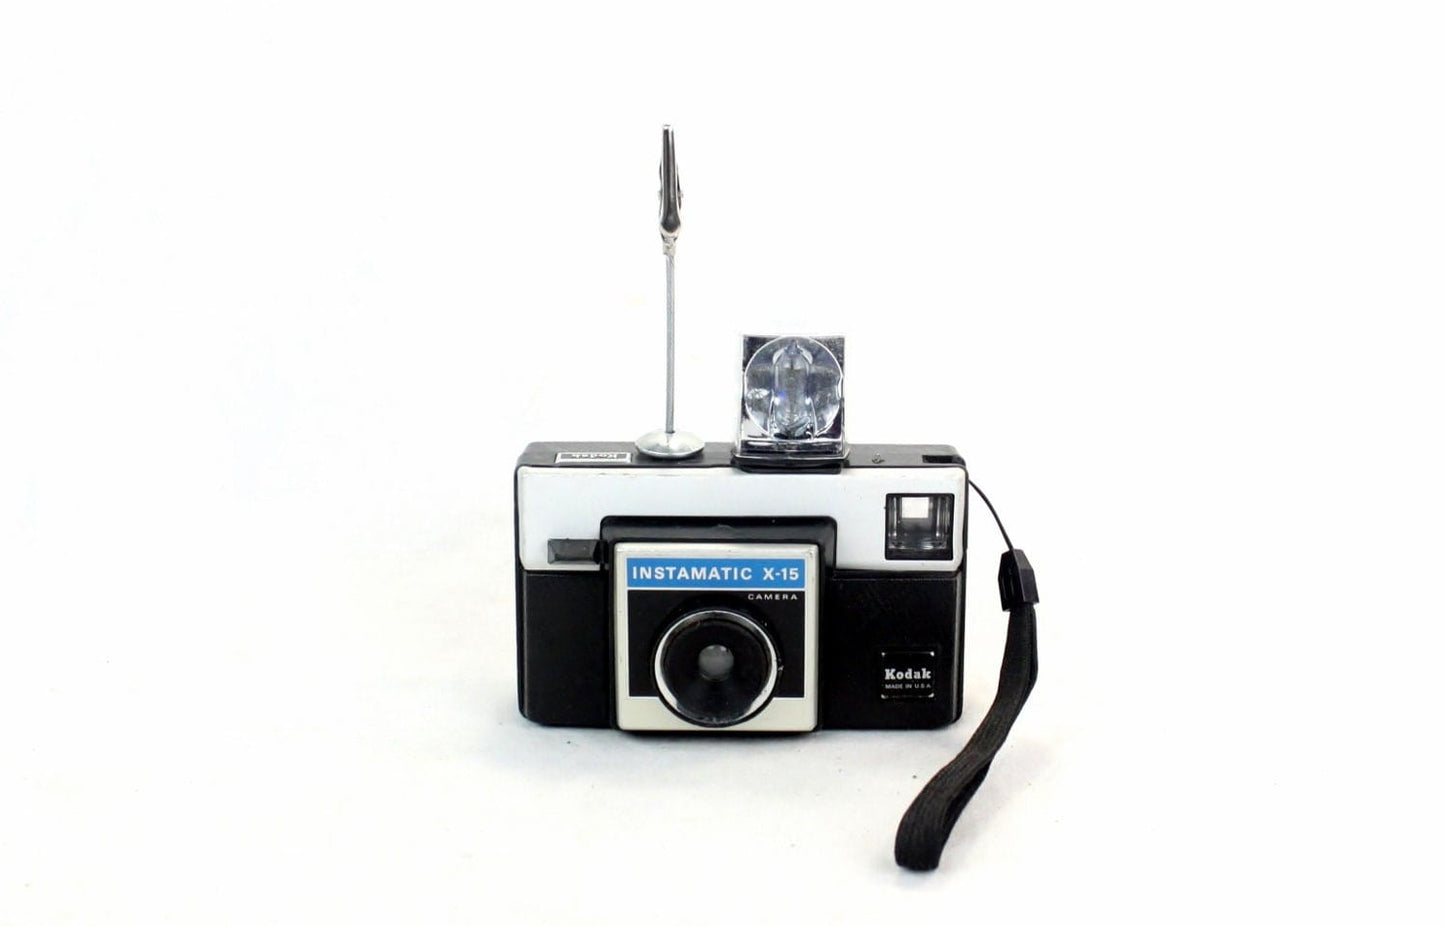 LightAndTimeArt Photo Holder Vintage Camera Photo Holder - Kodak Instamatic X-15 Camera - Wedding Name Card Holder, Photo Stand for Instax Film